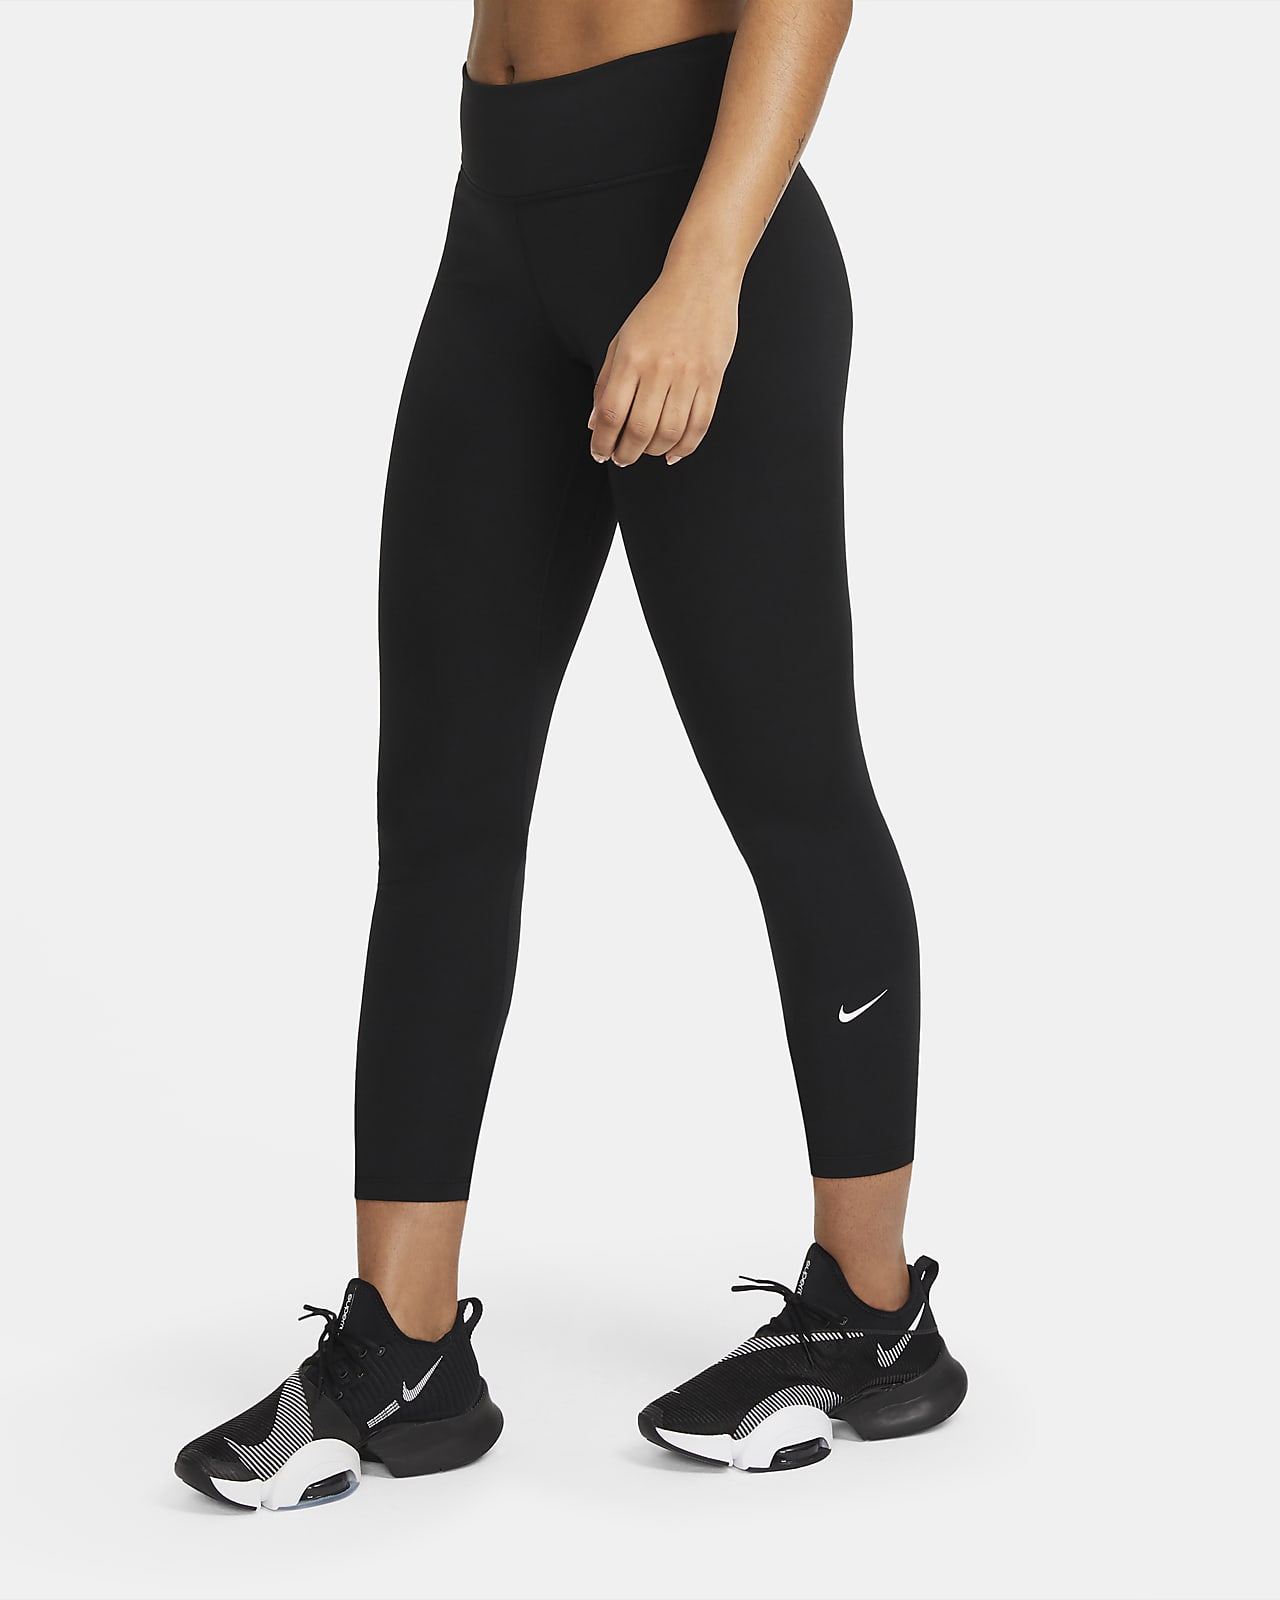 Legging court taille mi-haute Nike One pour femme